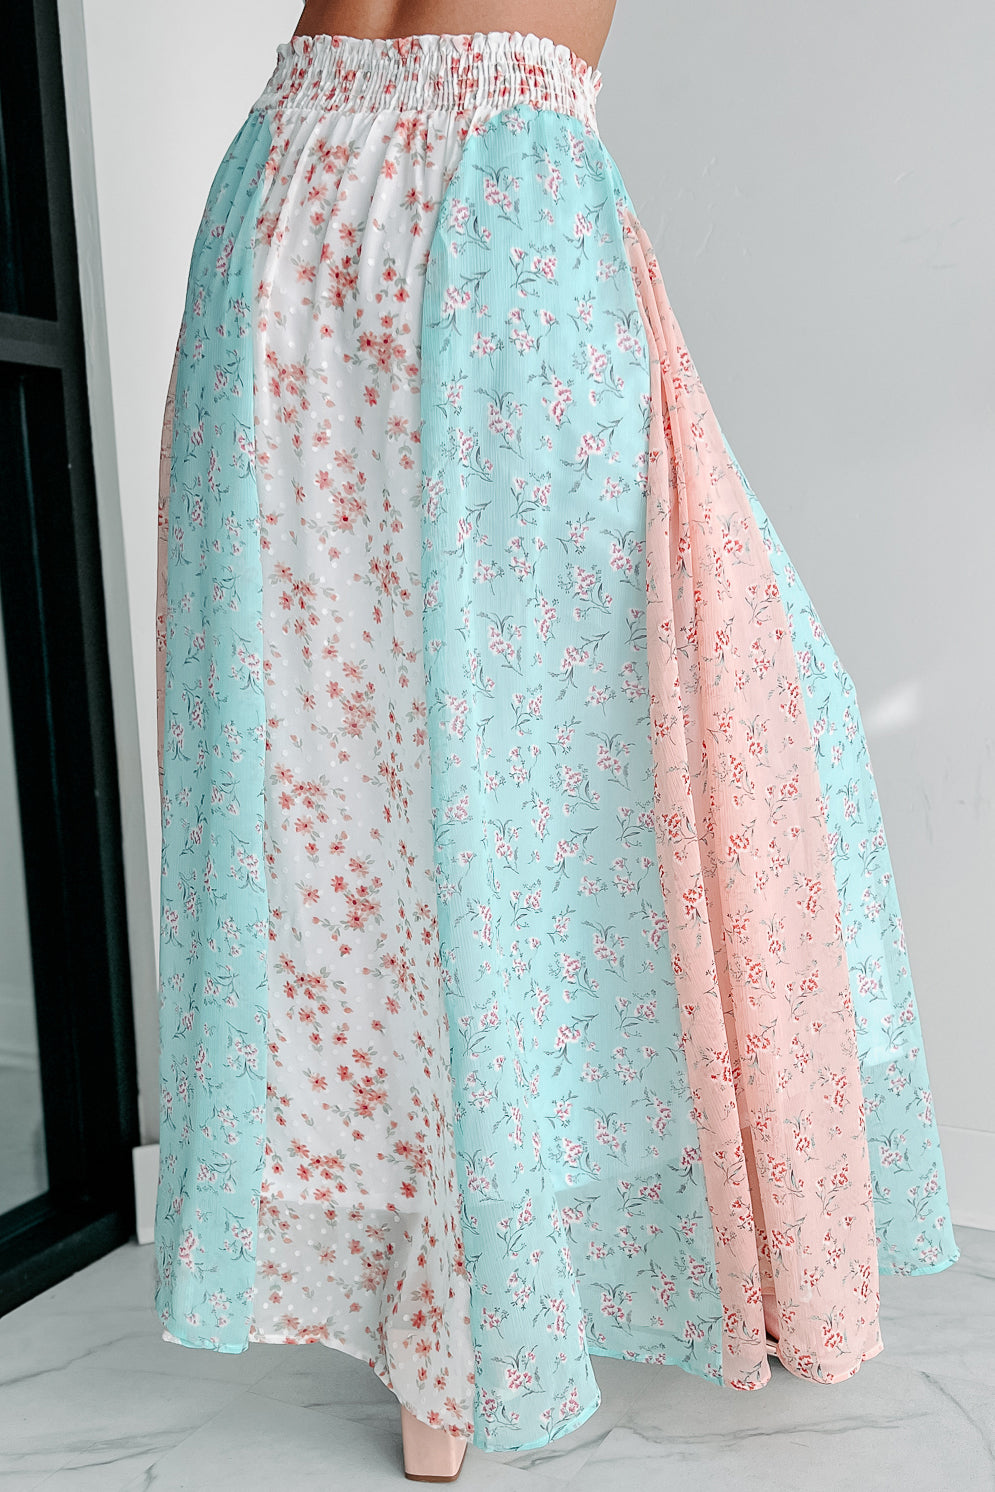 Making More Memories Floral Maxi Skirt (Ivory Multi) - NanaMacs